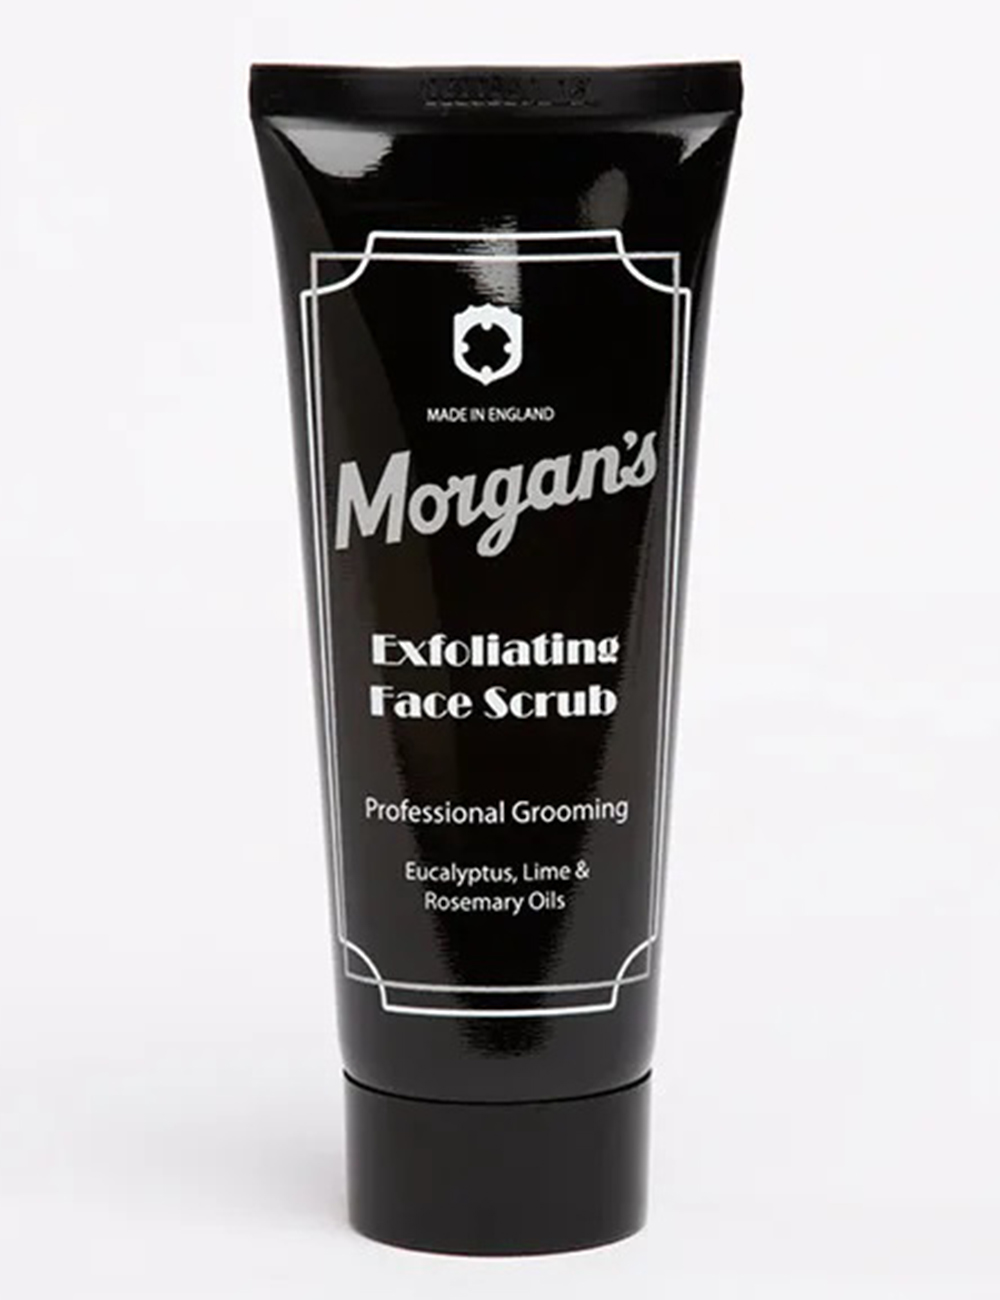 Morgans Exfoliating Face Scrub 100ml